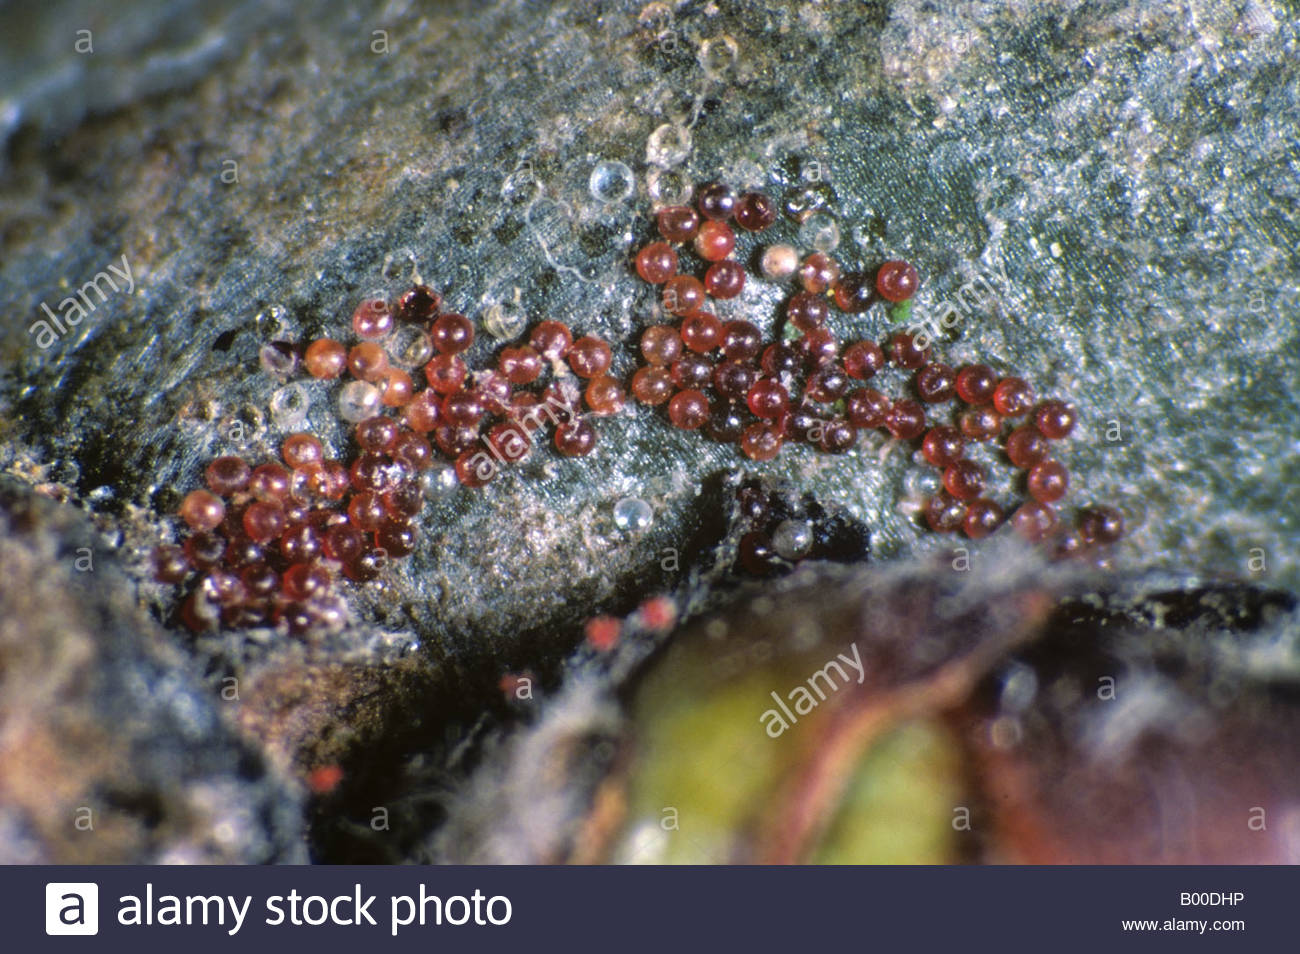 Overwintering eggs of fruit tree red spider mite Panonychus ulmi on